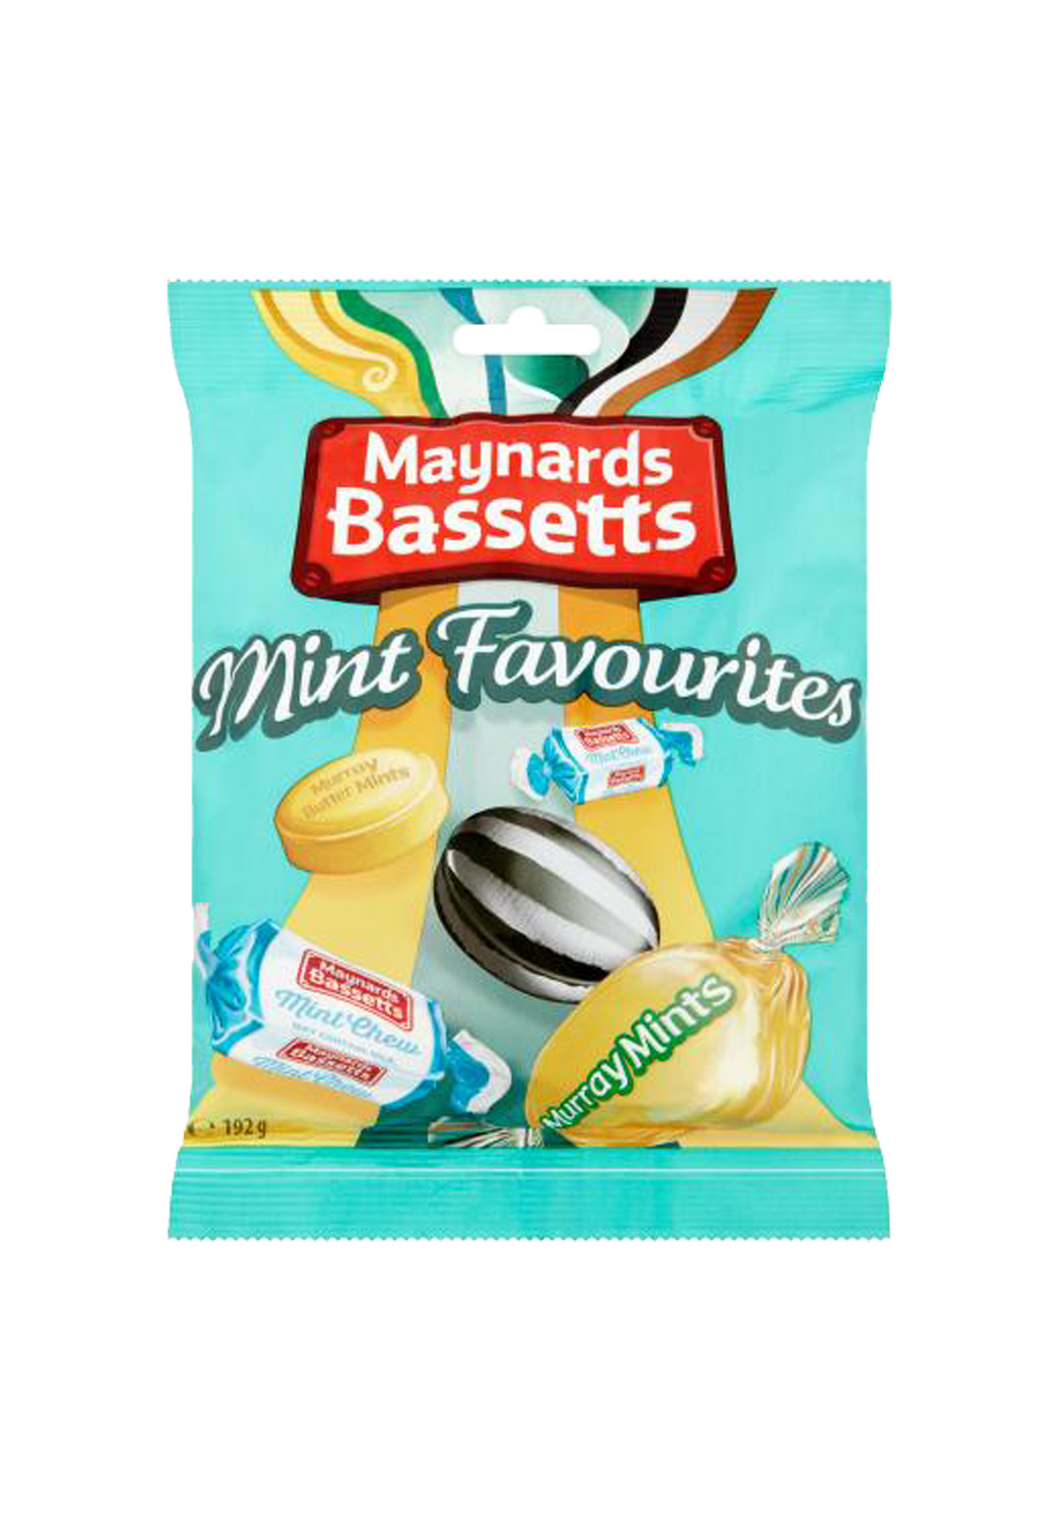 Maynards Bassetts Mint Favoured 192g